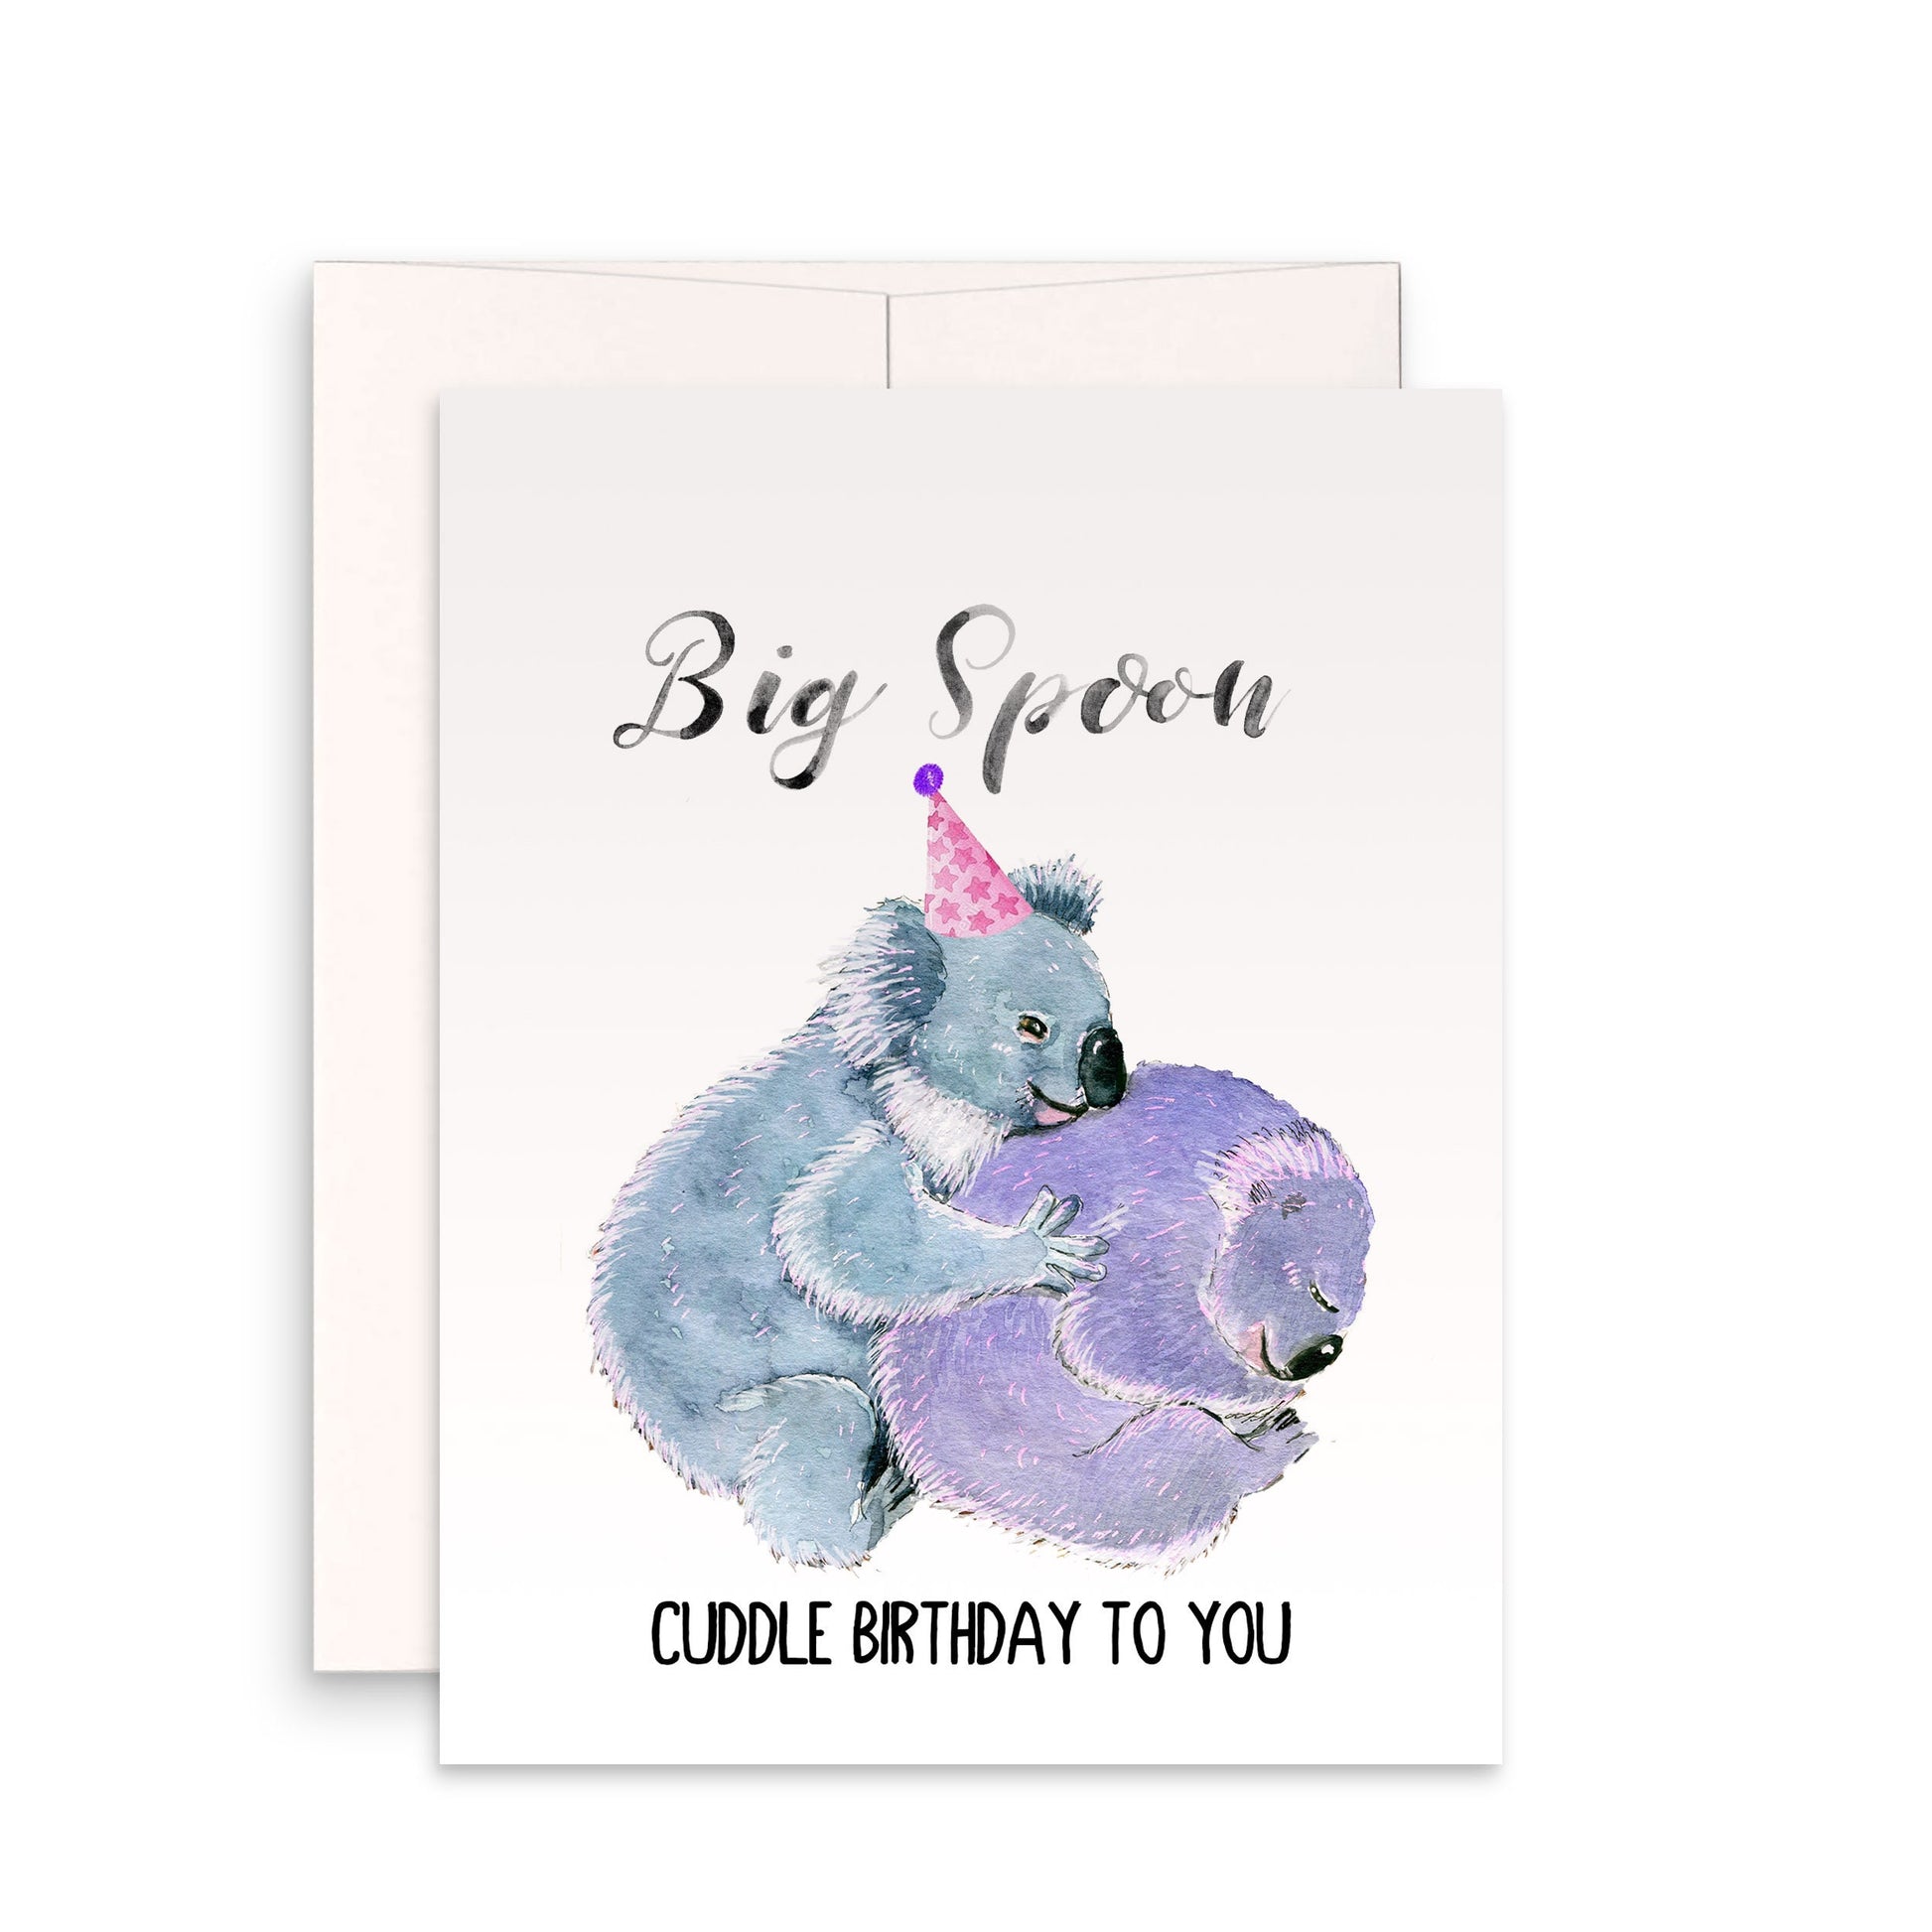 Cuddle Koala Birthday Card For Big Spoon - Cute Birthday Card For Boyfriend - Husband Birthday Gift From Wife